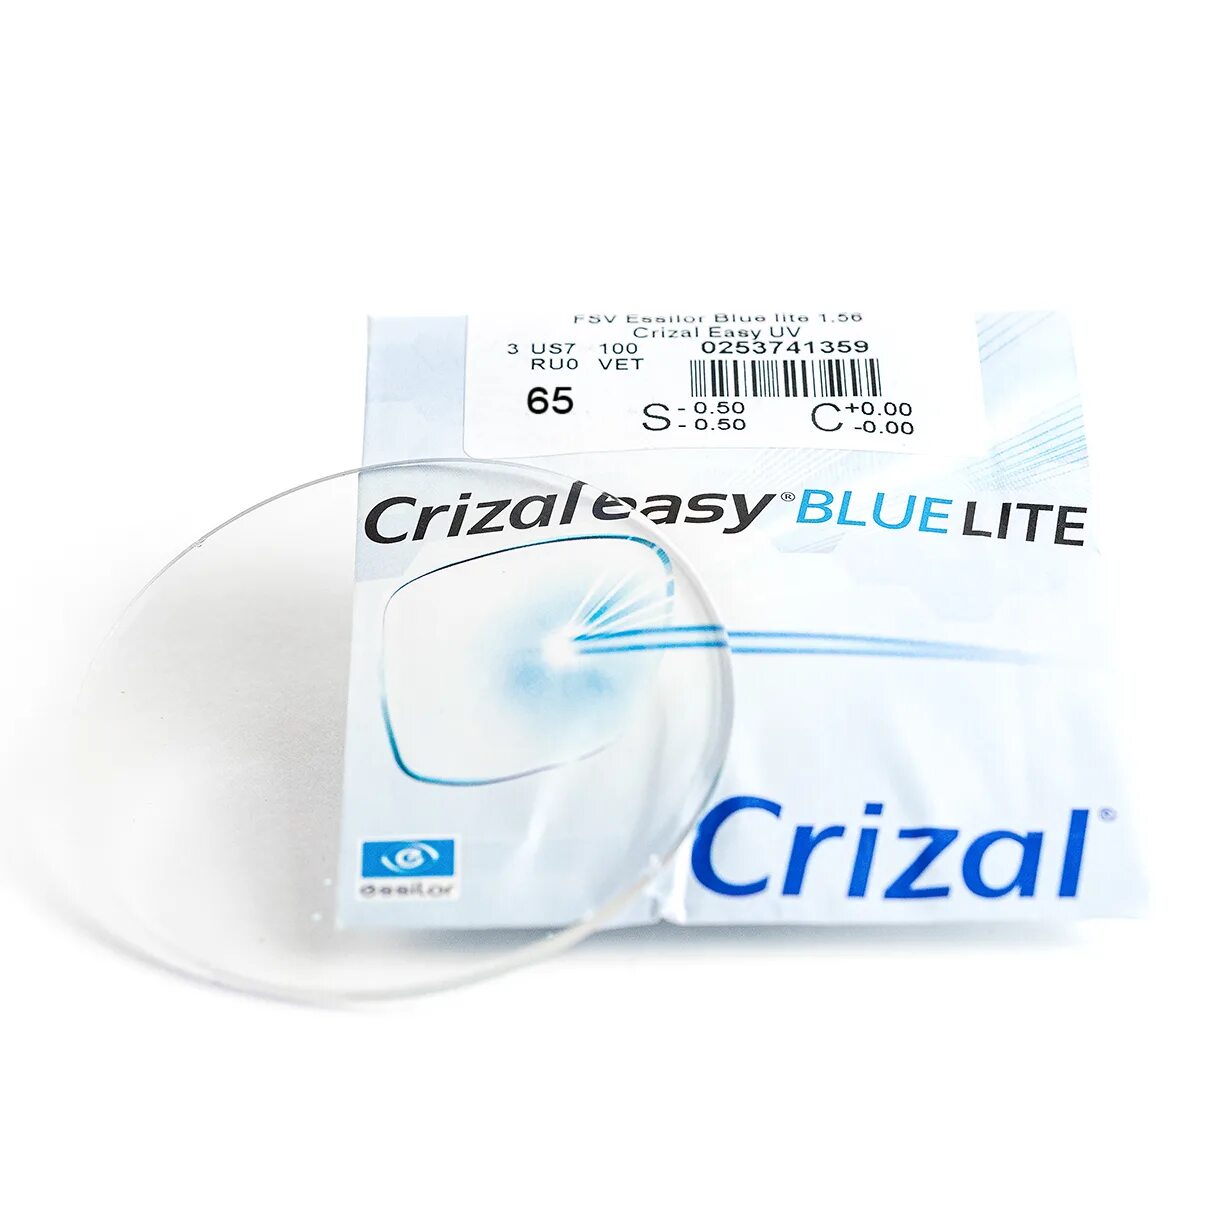 Crizal easy. Essilor Blue Lite Crizal easy UV. Линзы Essilor 1,59 Stellest Crizal easy Pro UV. Crizal Sapphire линзы. Линза однофокальная 1.56 сферическая.